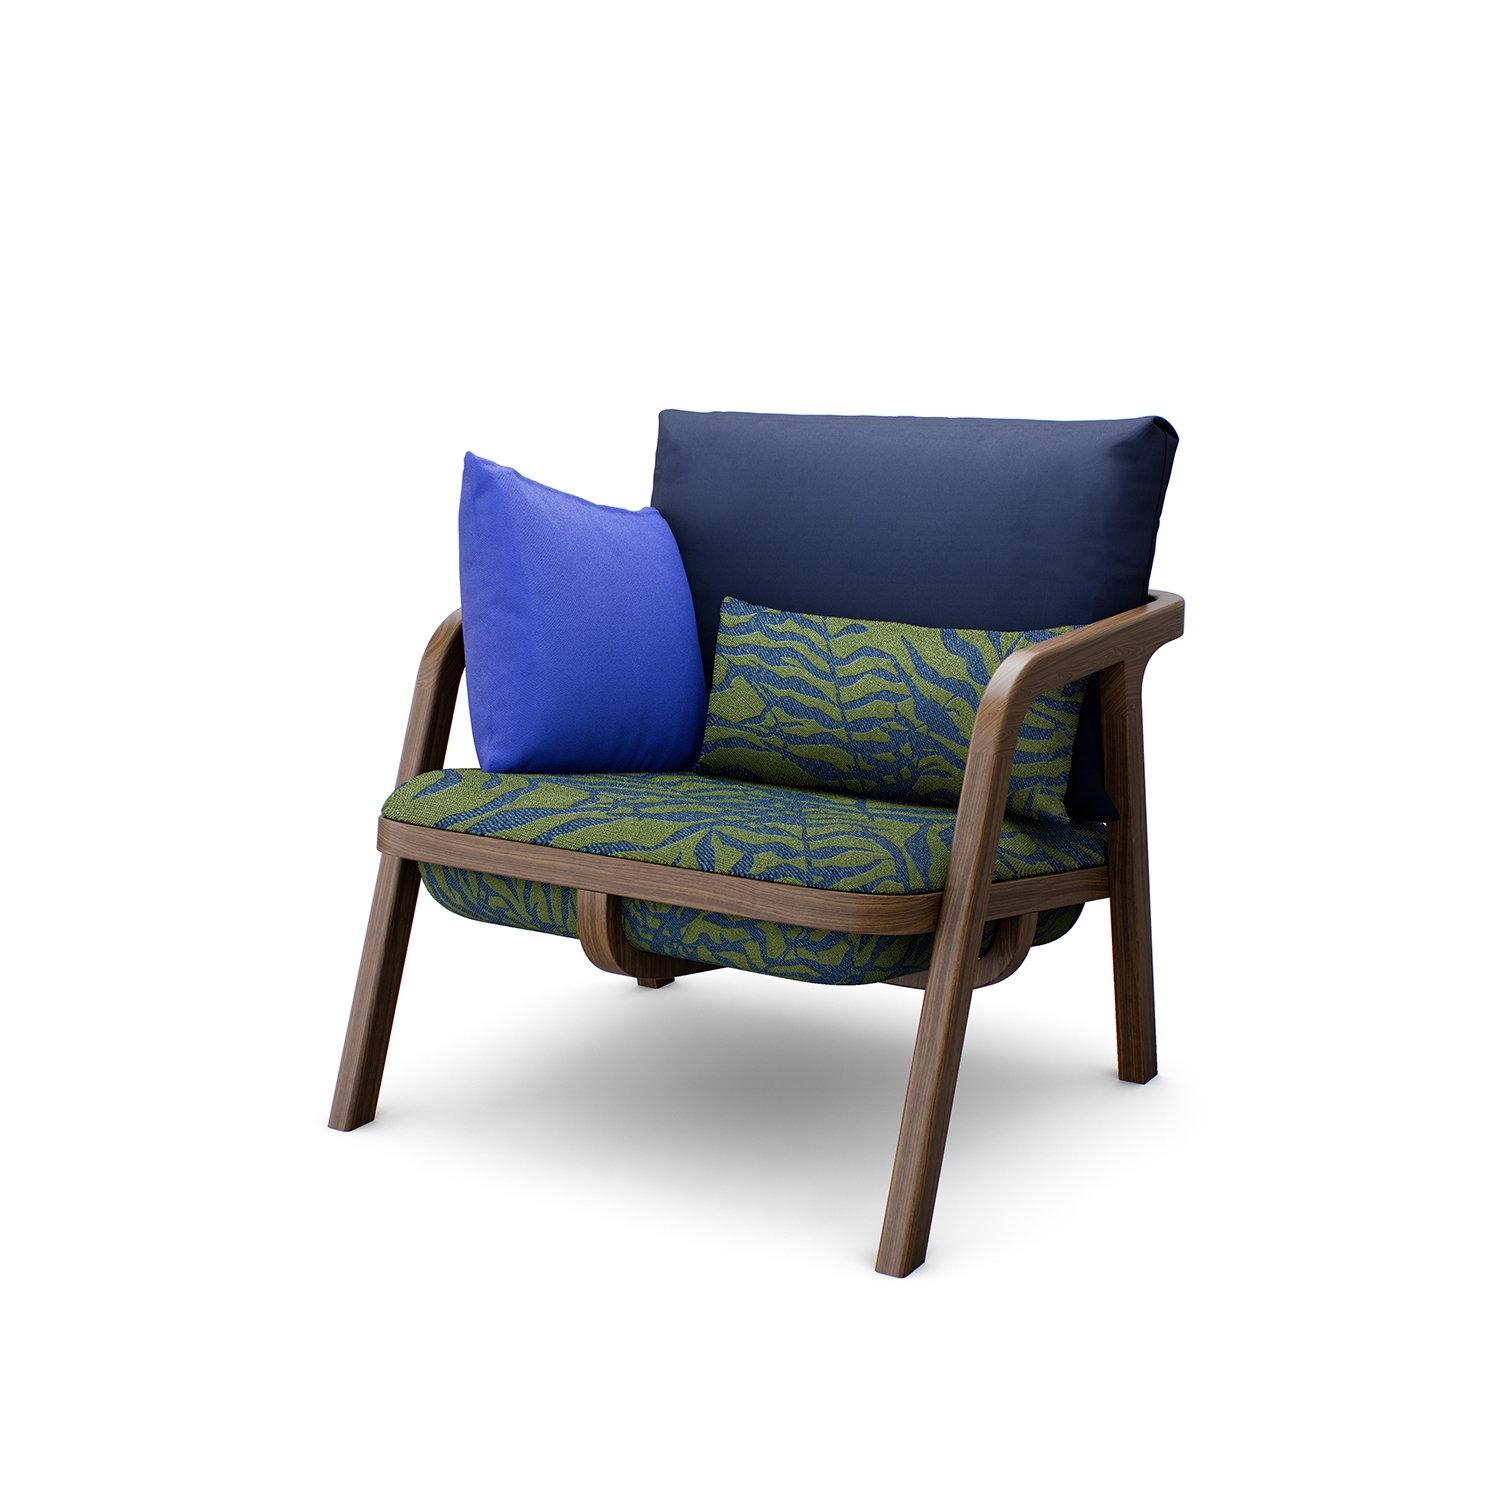 The BERCEAU armchair